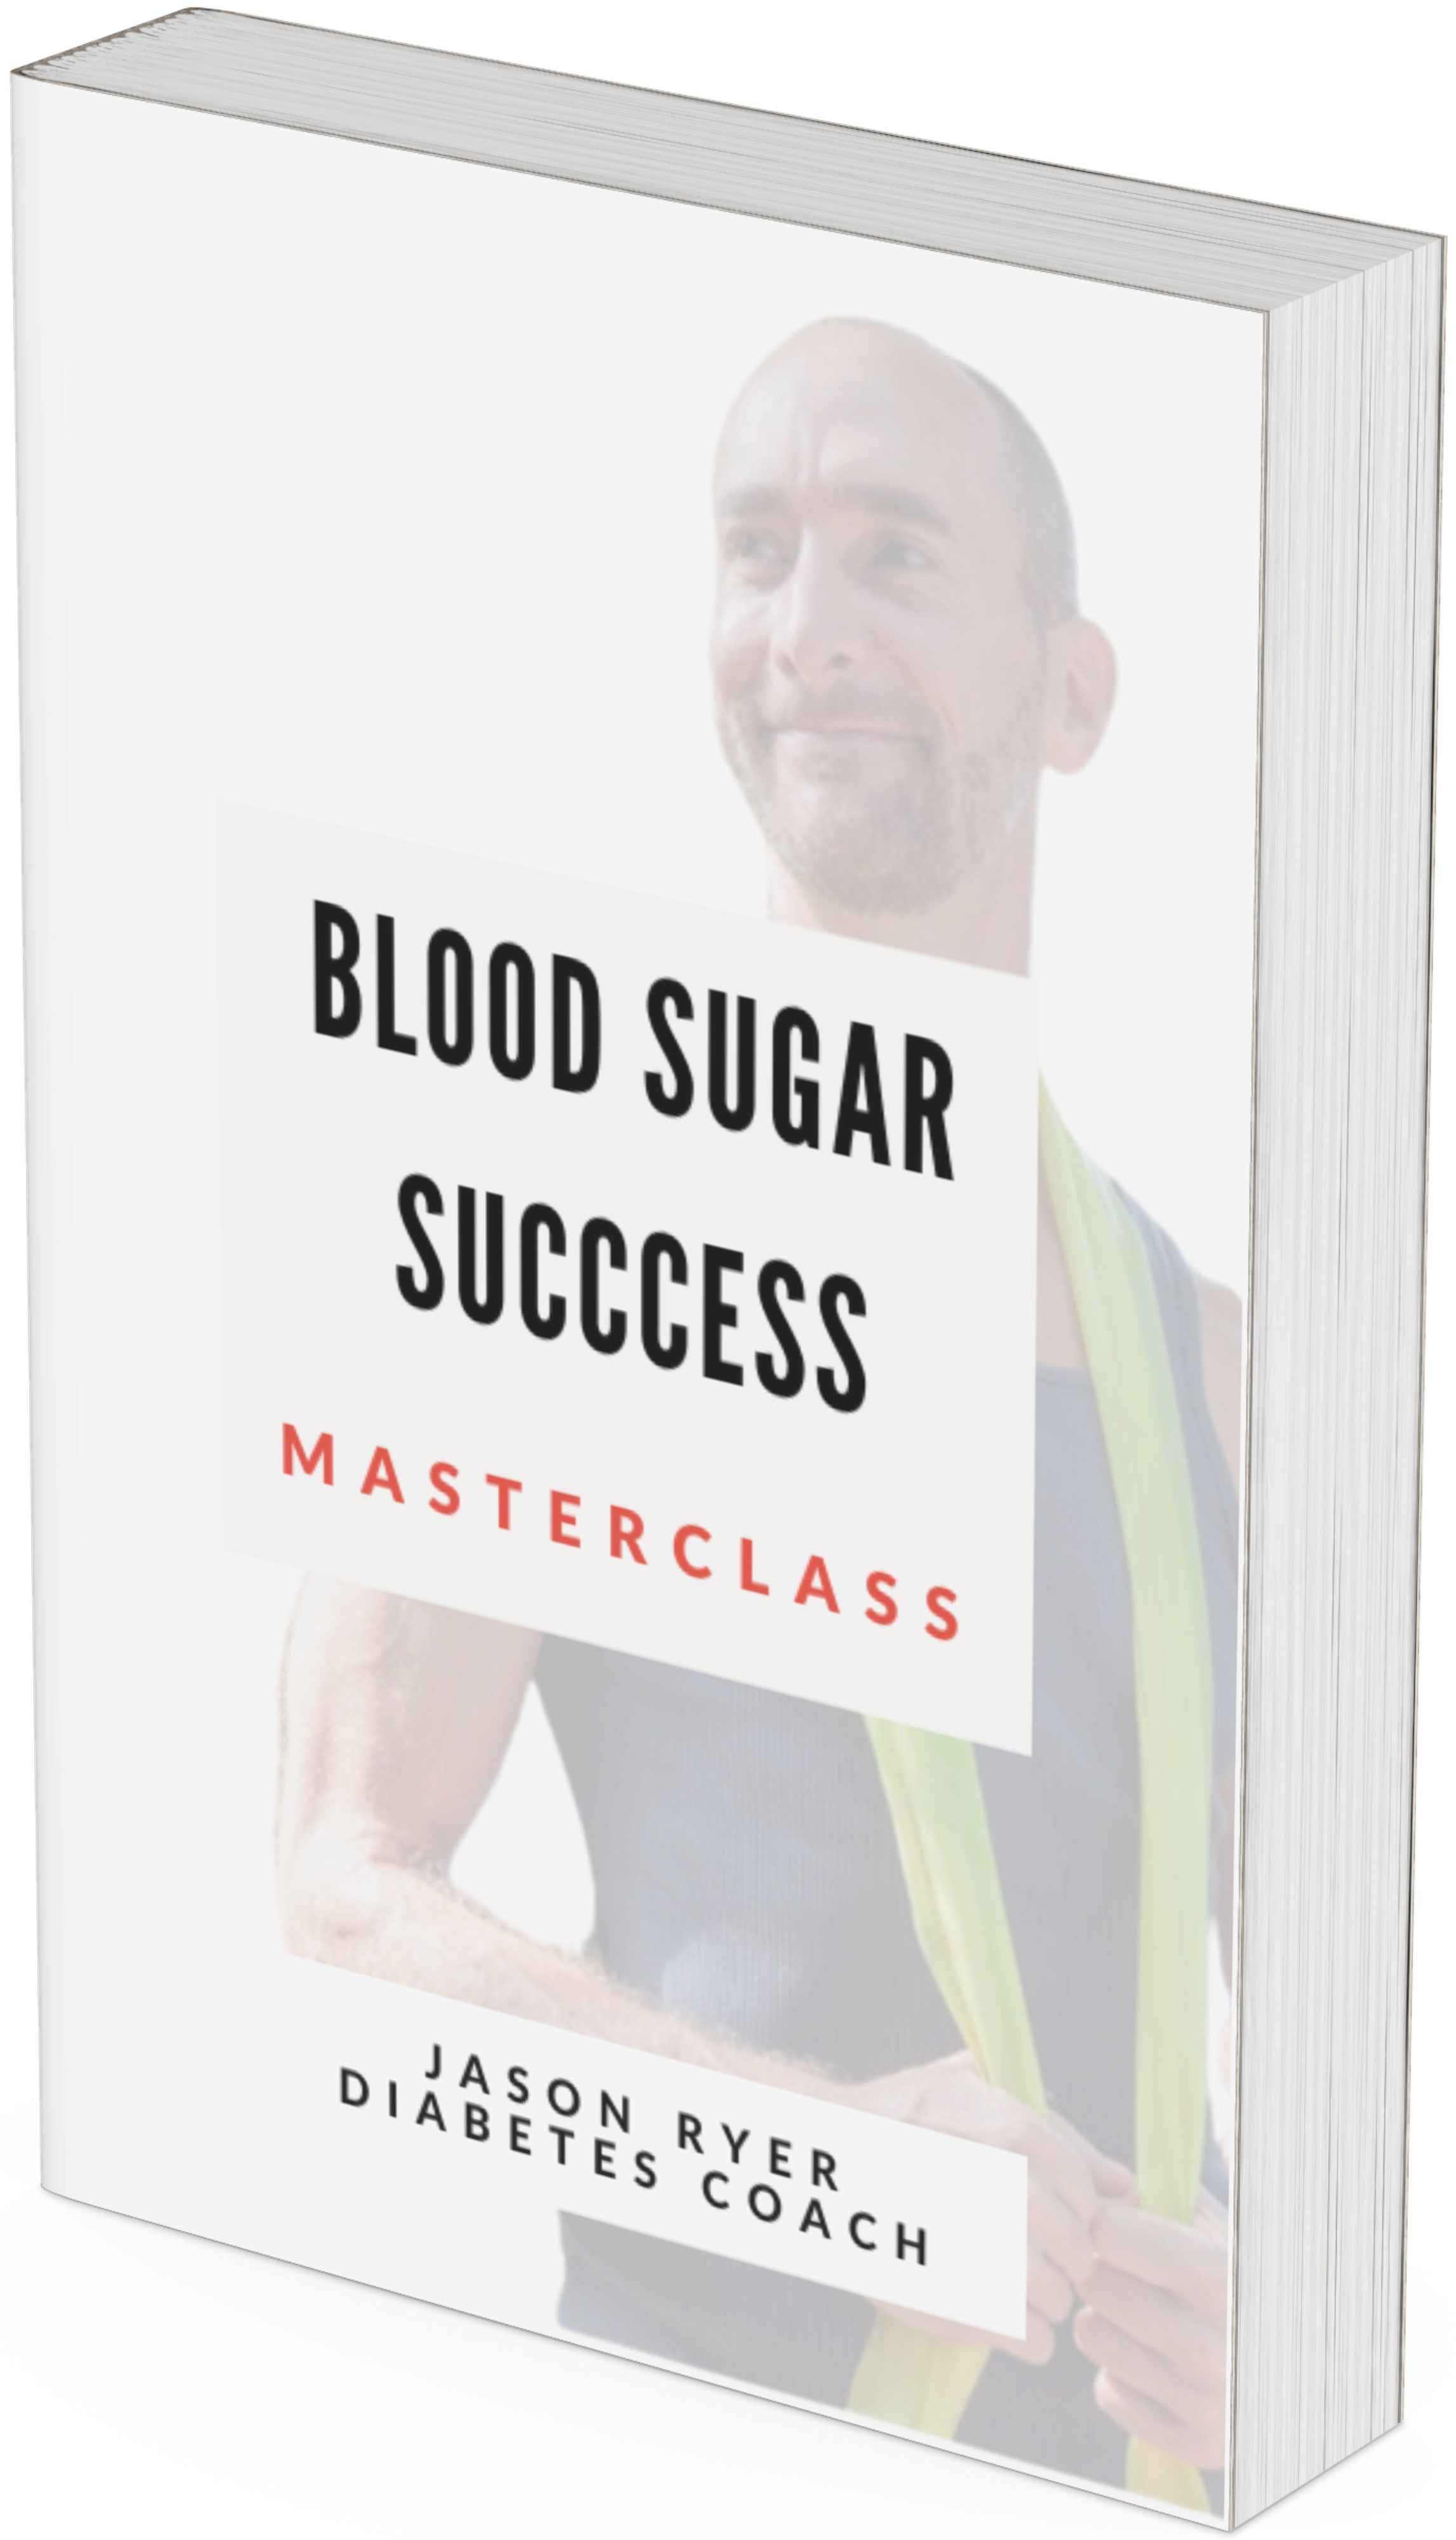 Blood Sugar Success Masterclass by Jason Ryer